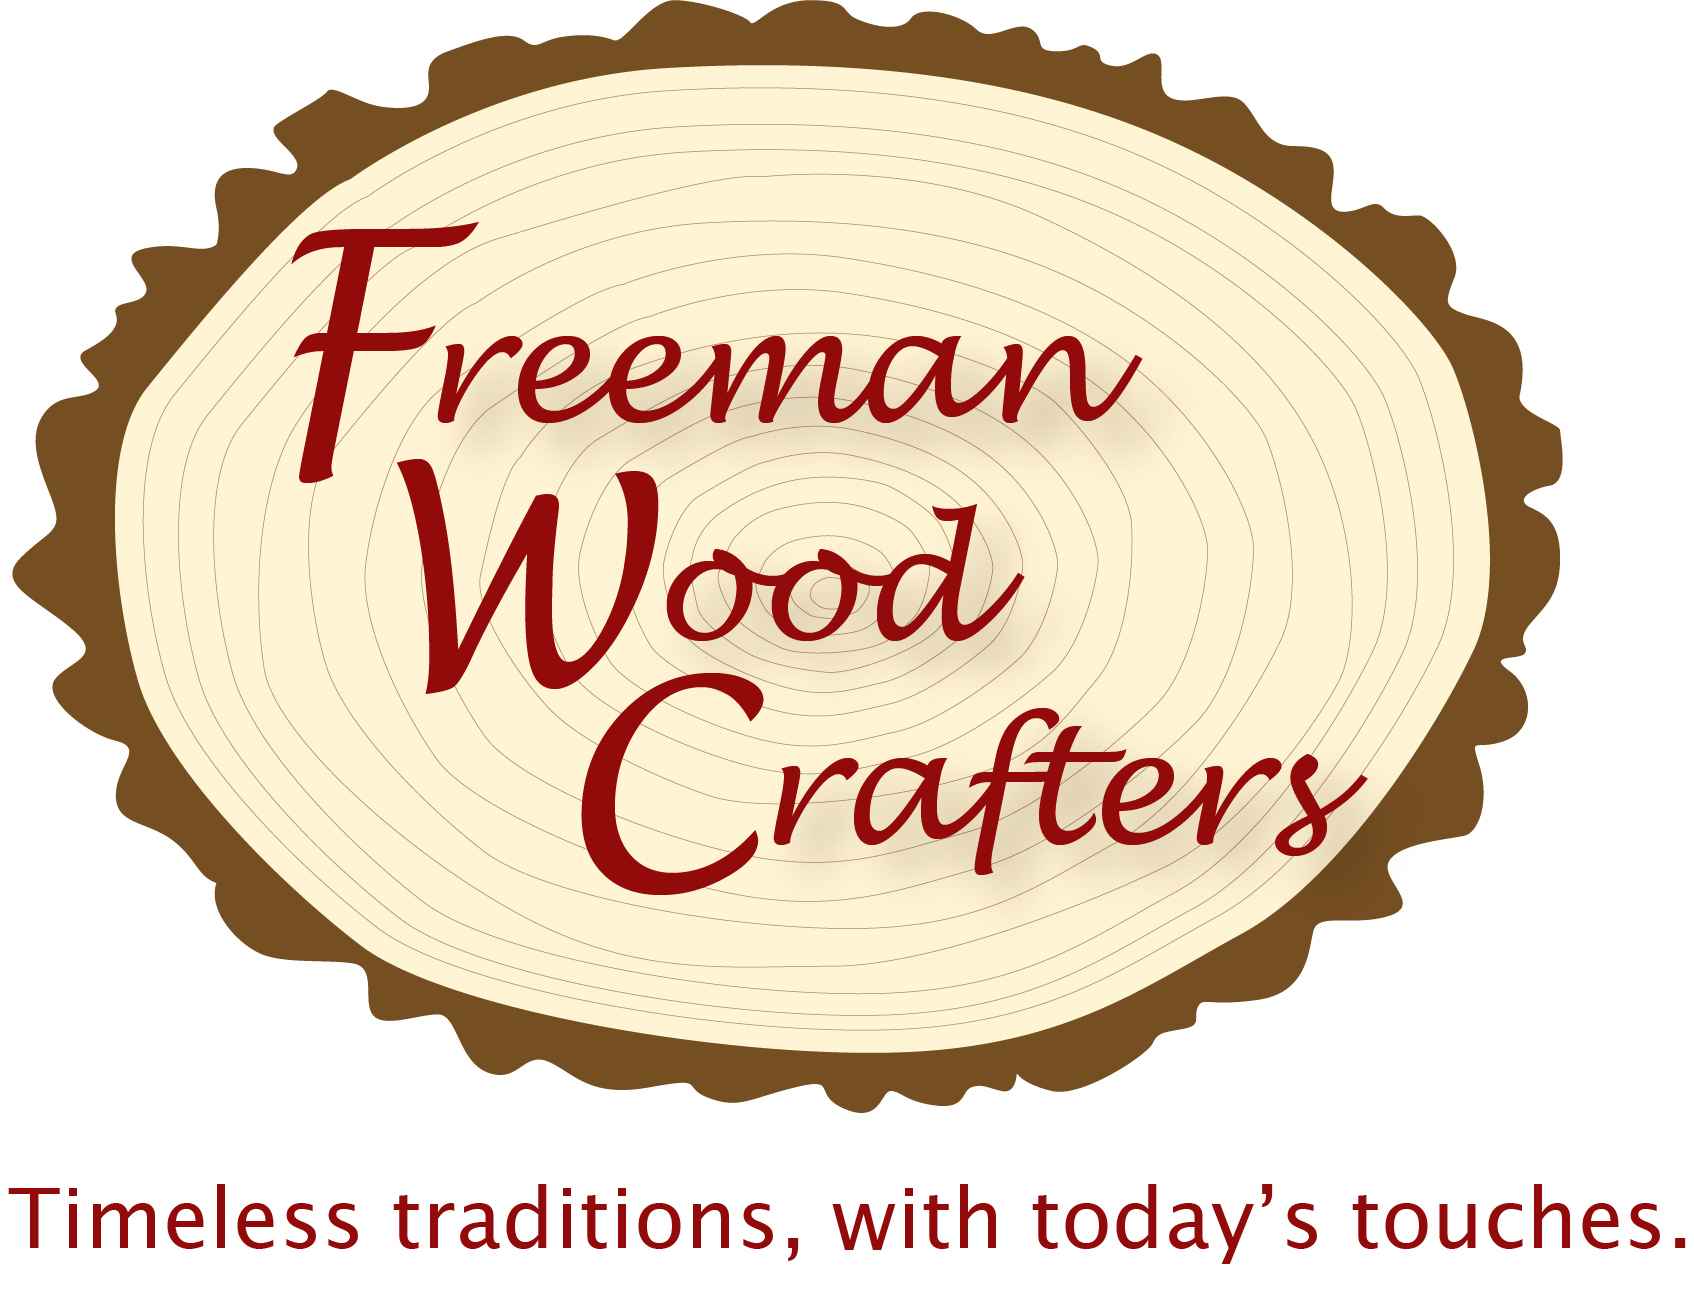 Freeman Wood Crafters